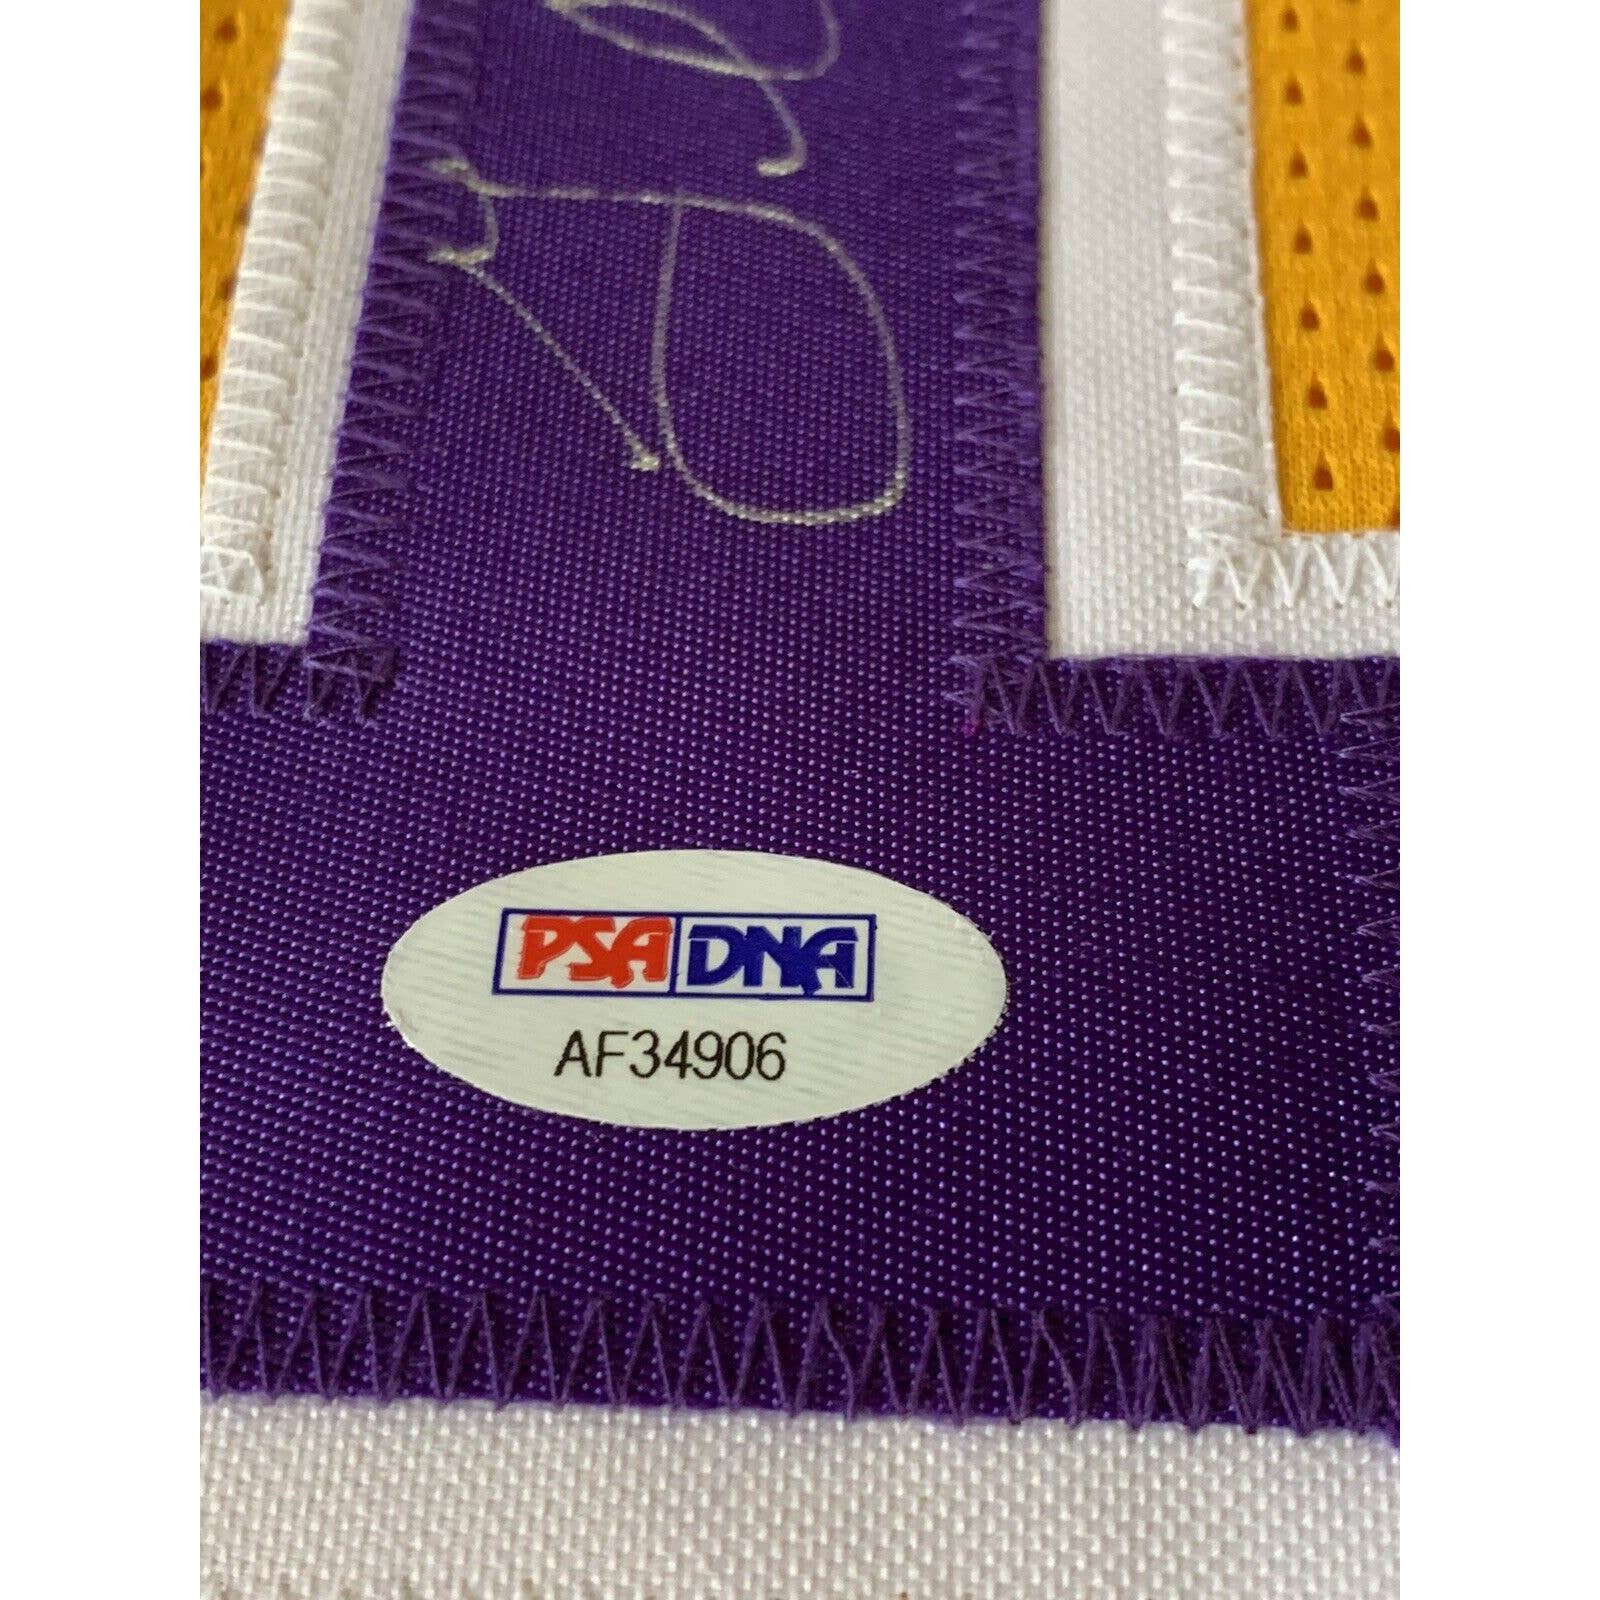 Glen Rice Autographed/Signed Jersey PSA/DNA COA Los Angeles Lakers LA - TreasuresEvolved